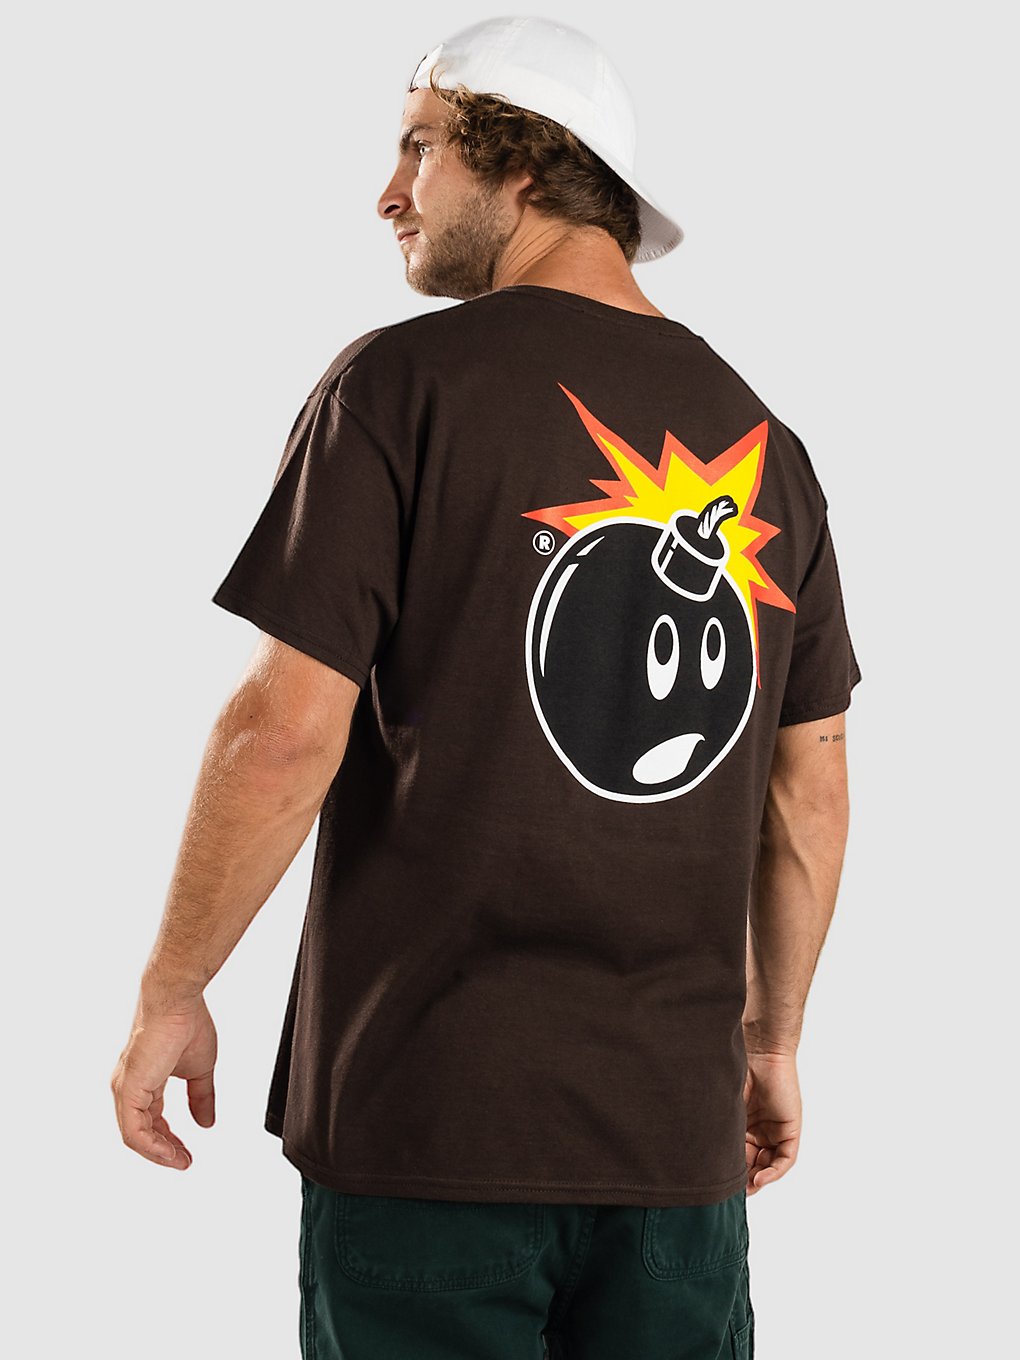 Adam Bomb T-Shirt brown kaufen